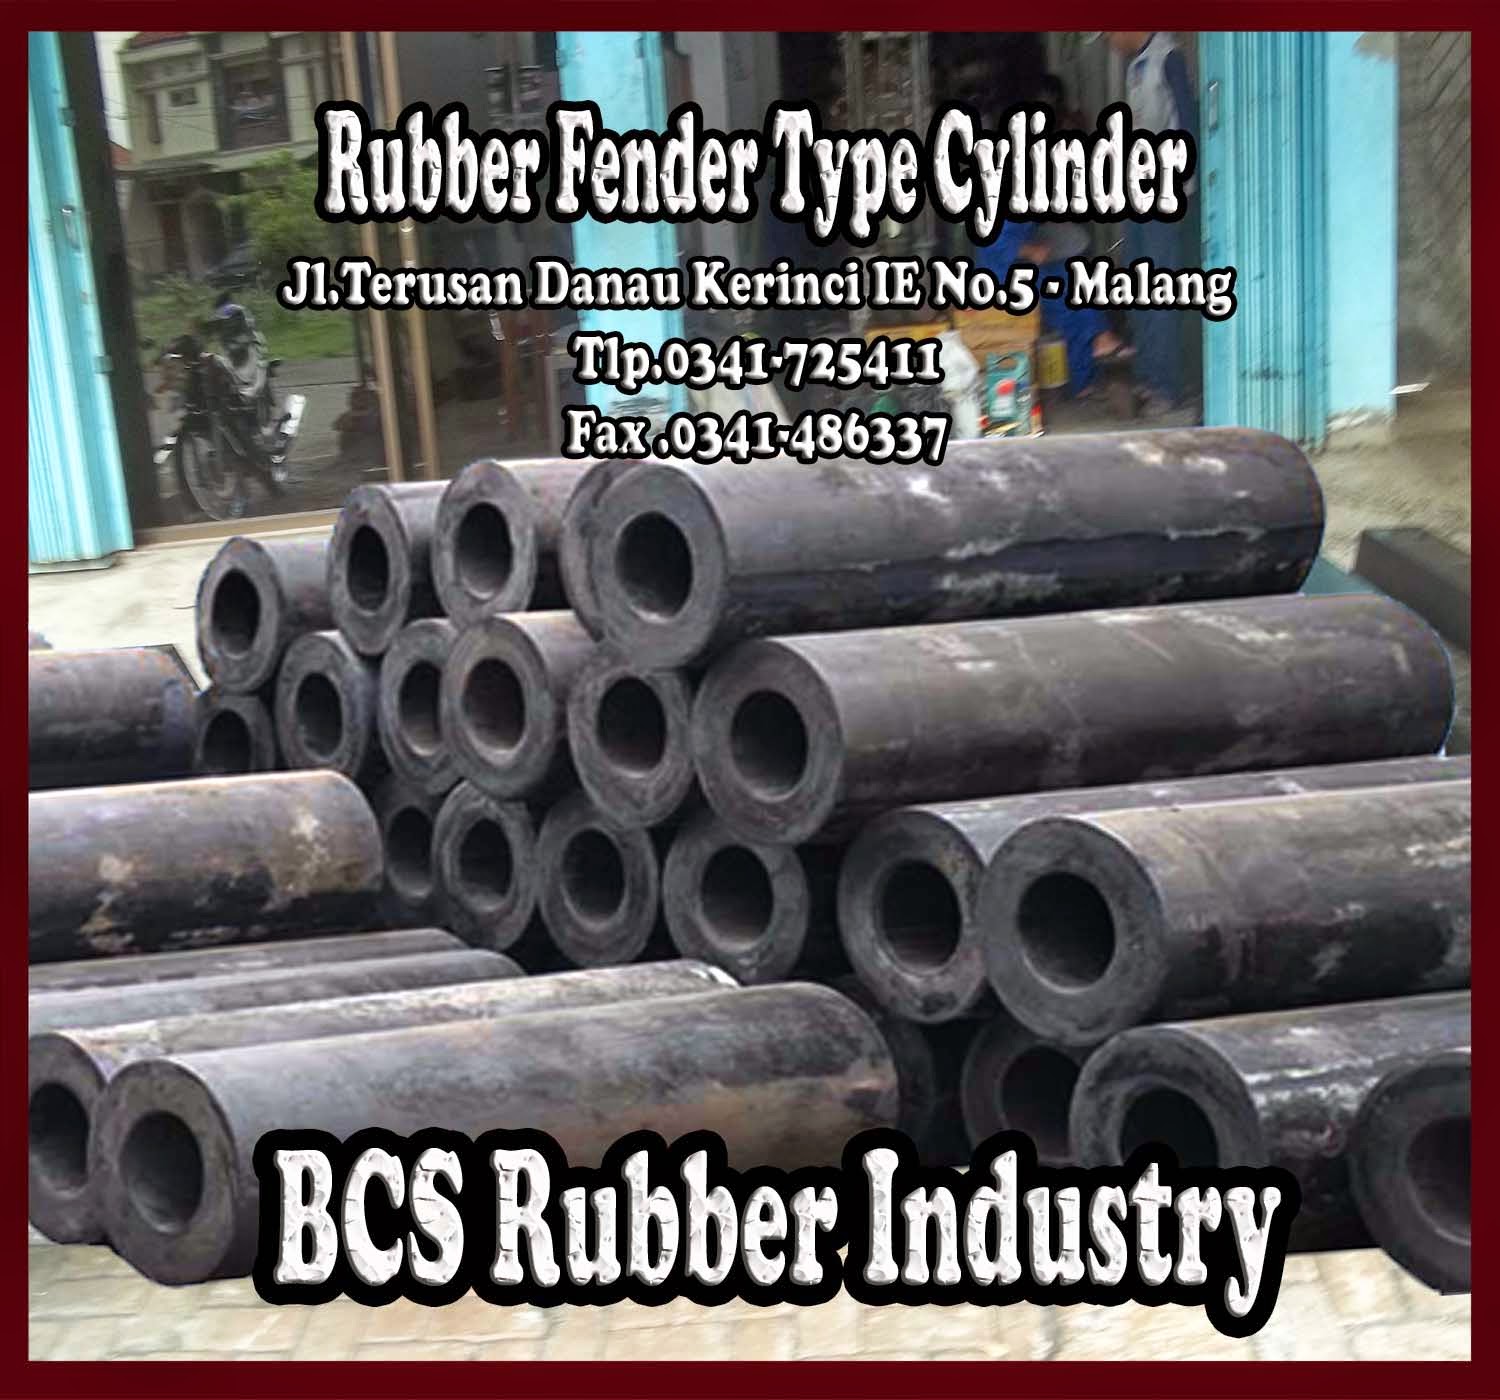 Rubber Fender Type Cylinder